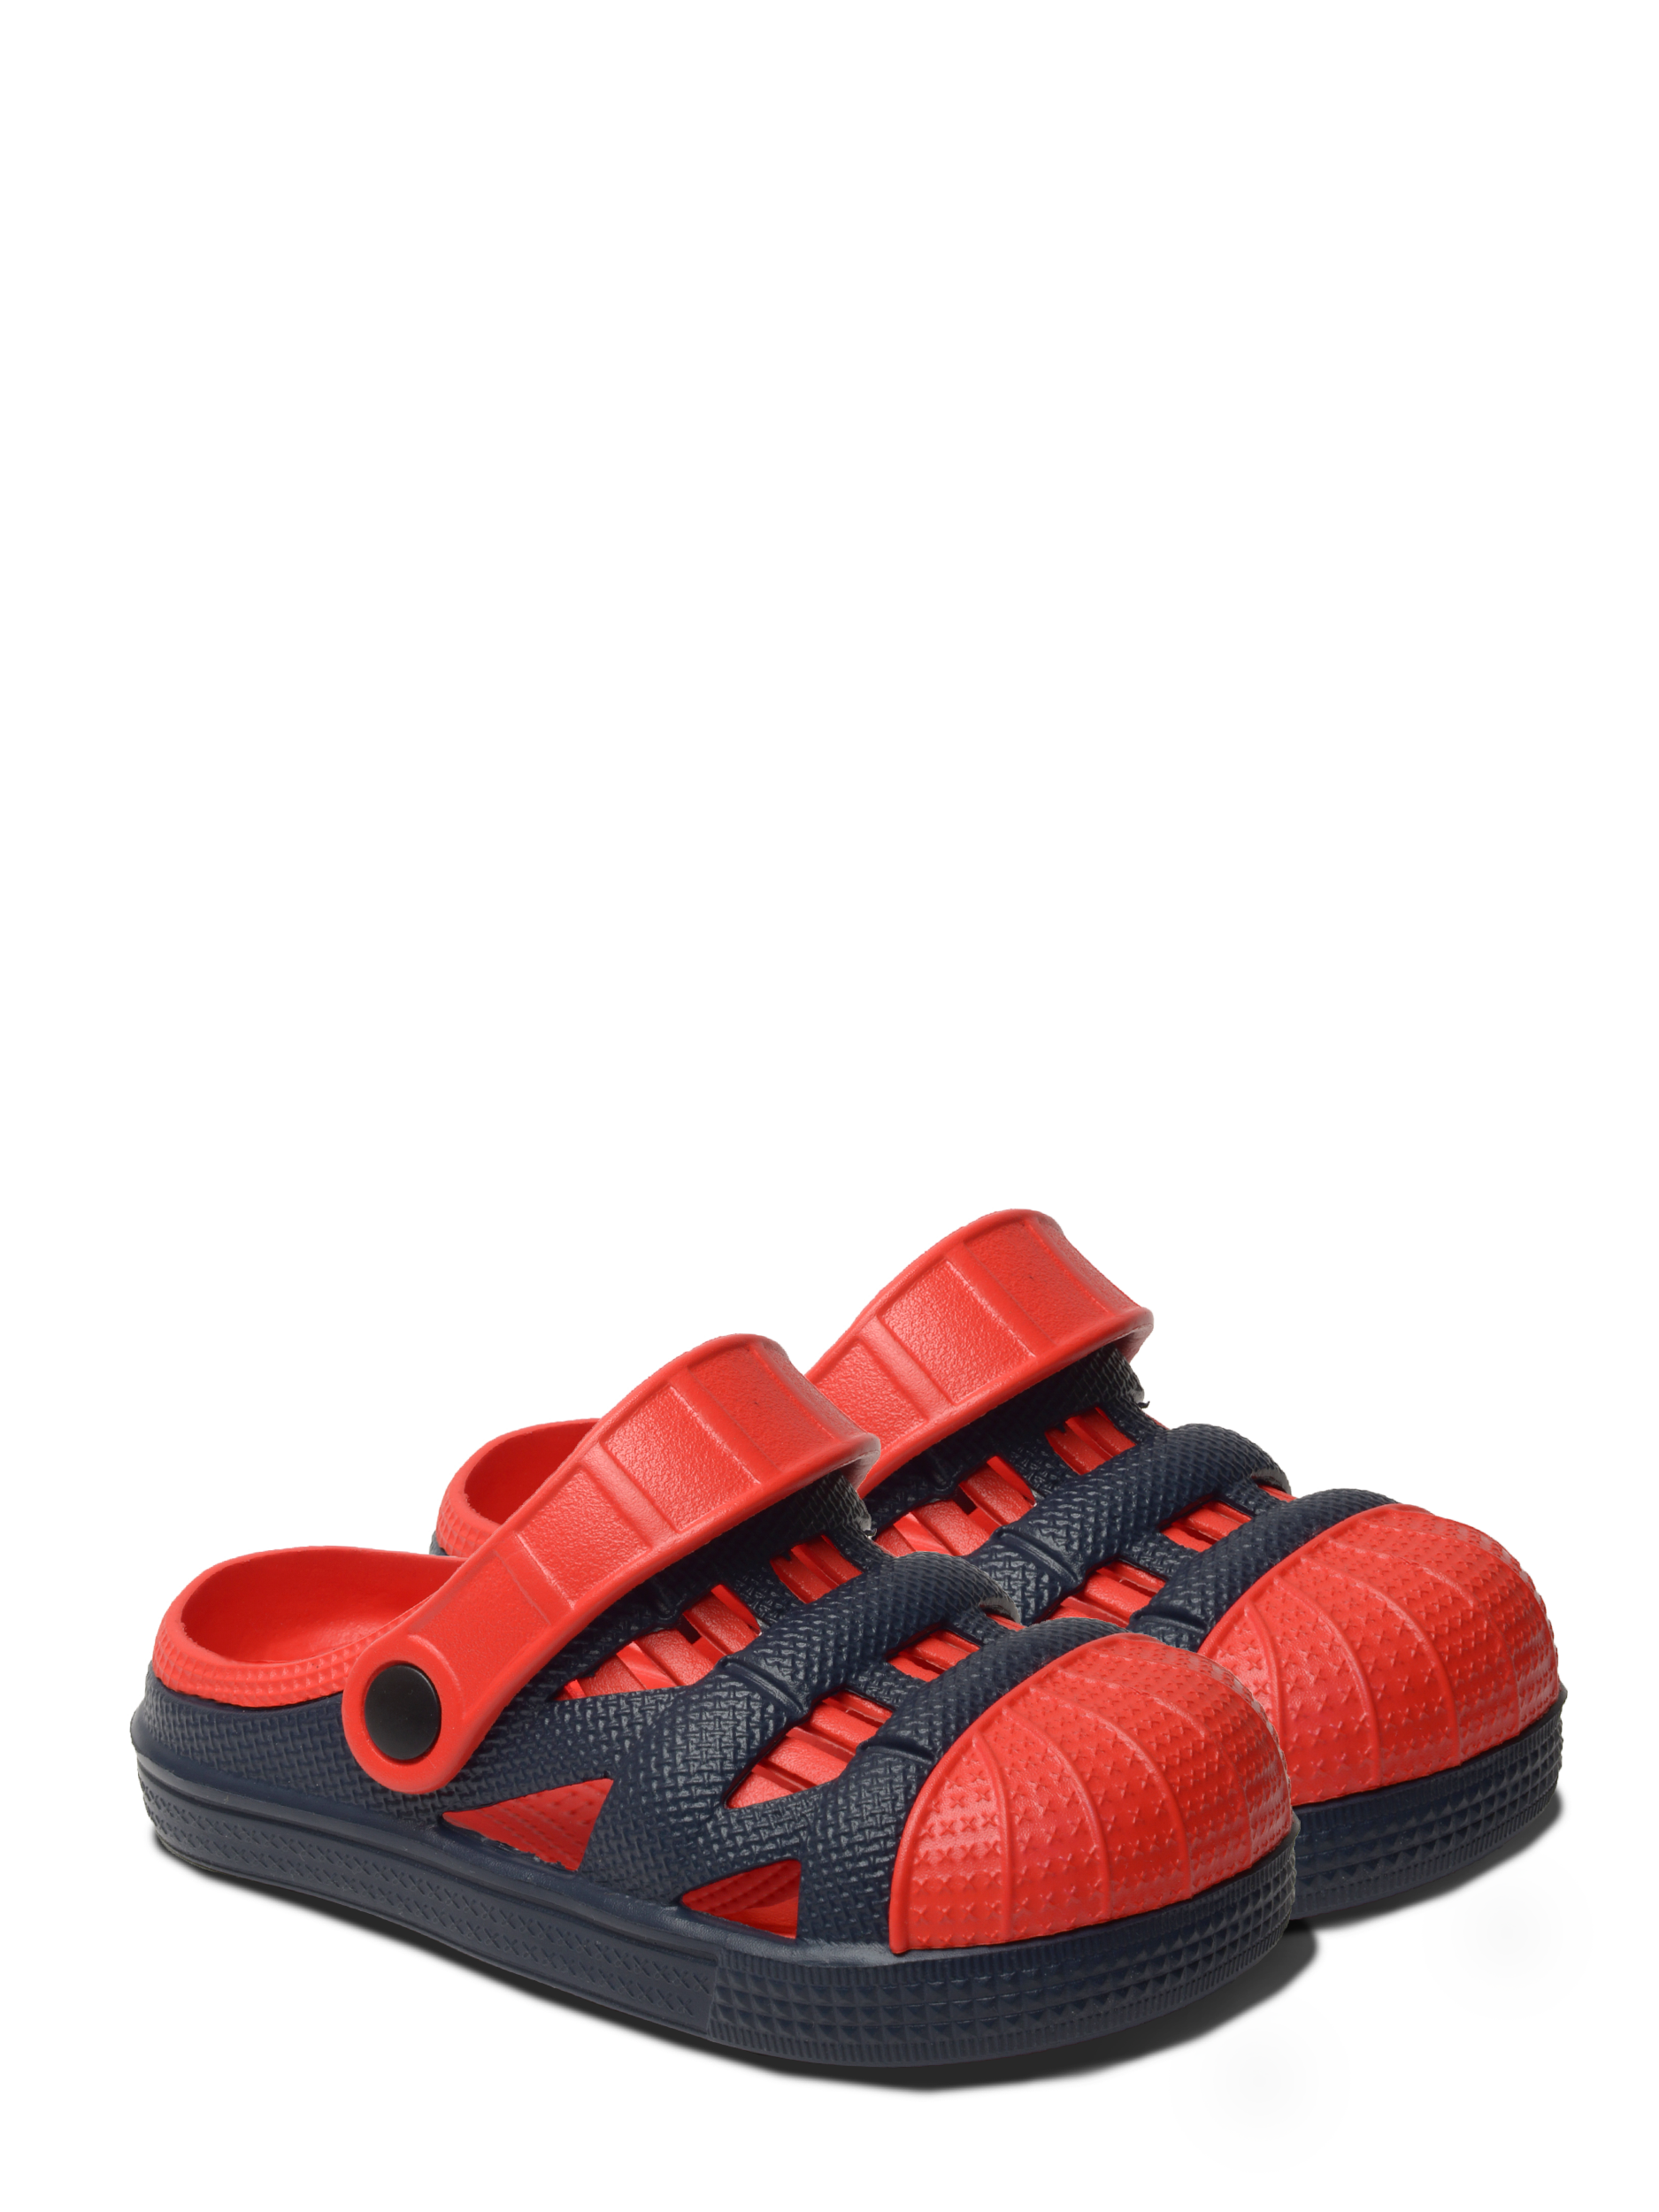 Kids Lightweight Sandals - Navy/Red